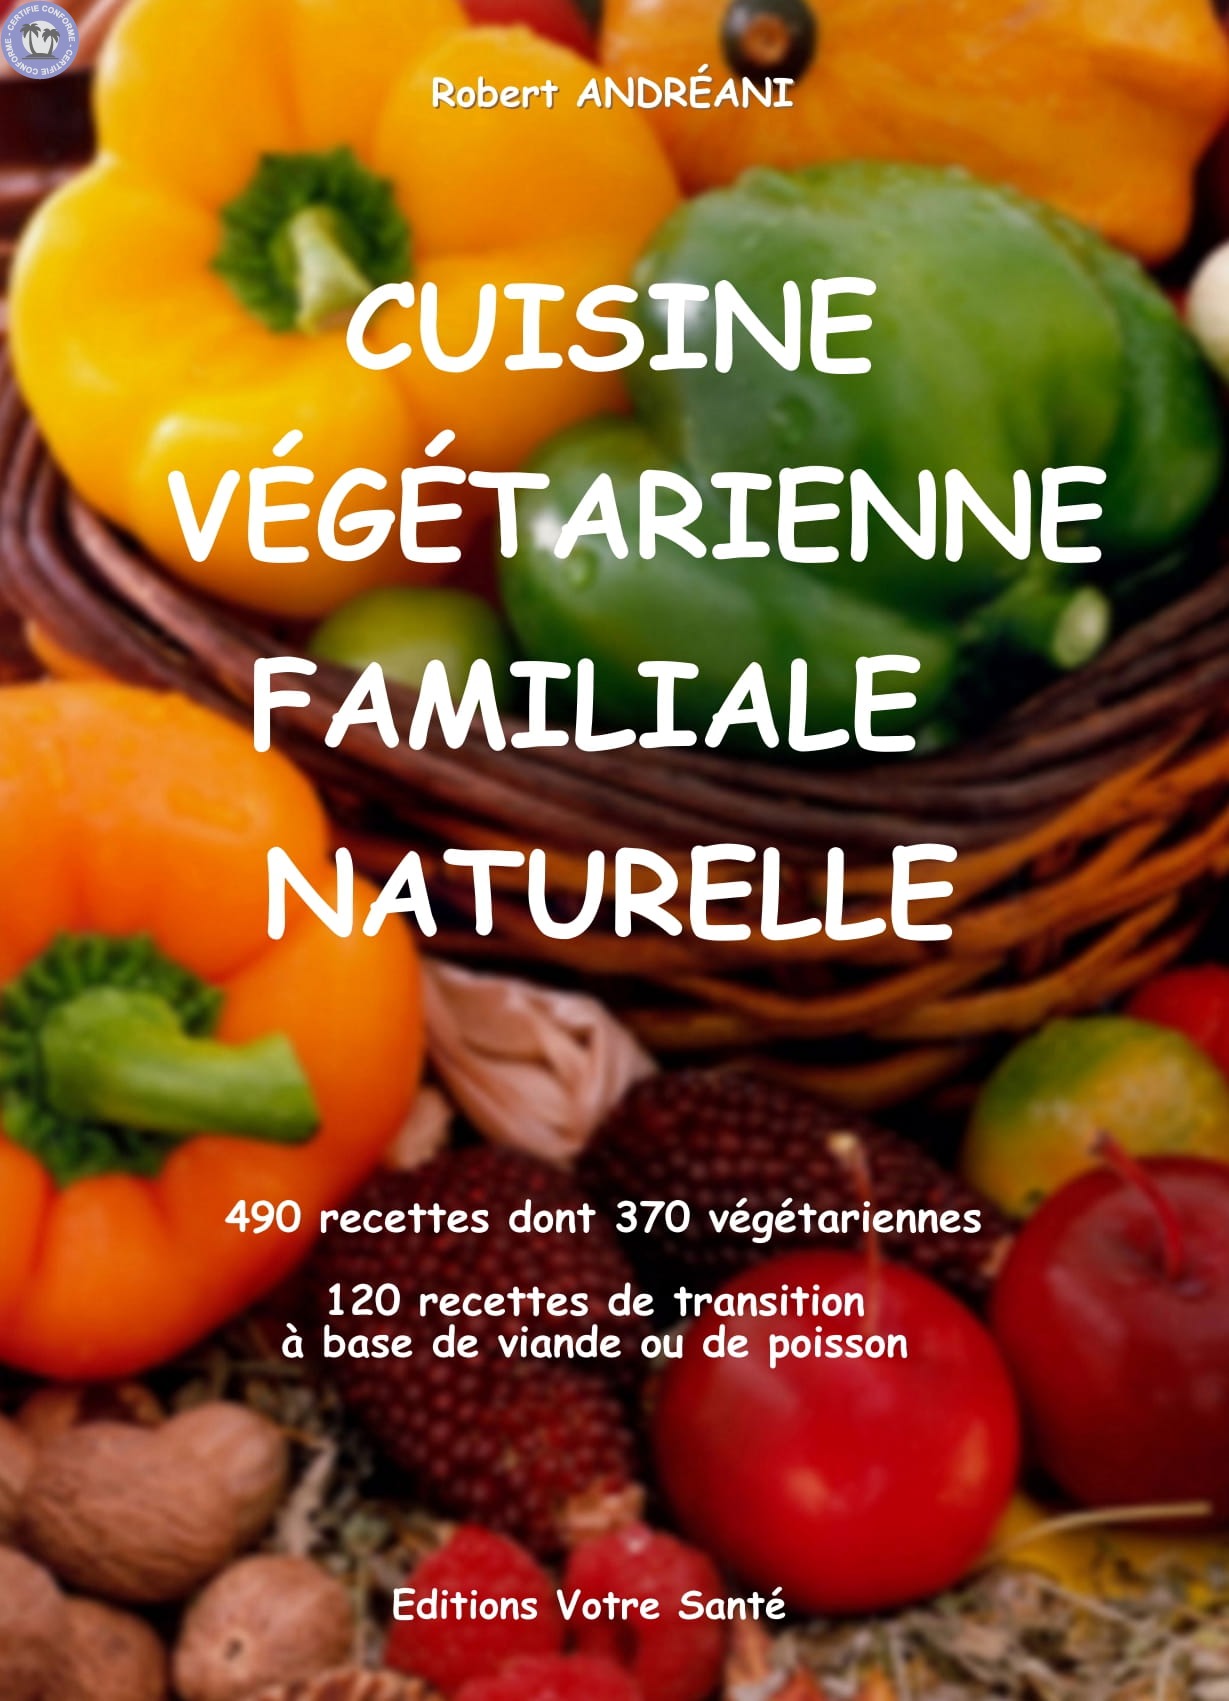 media-amp-presse-fribourg-cuisine-vegetarienne-familiale-naturelle-naturelle8161927282933406976.jpg